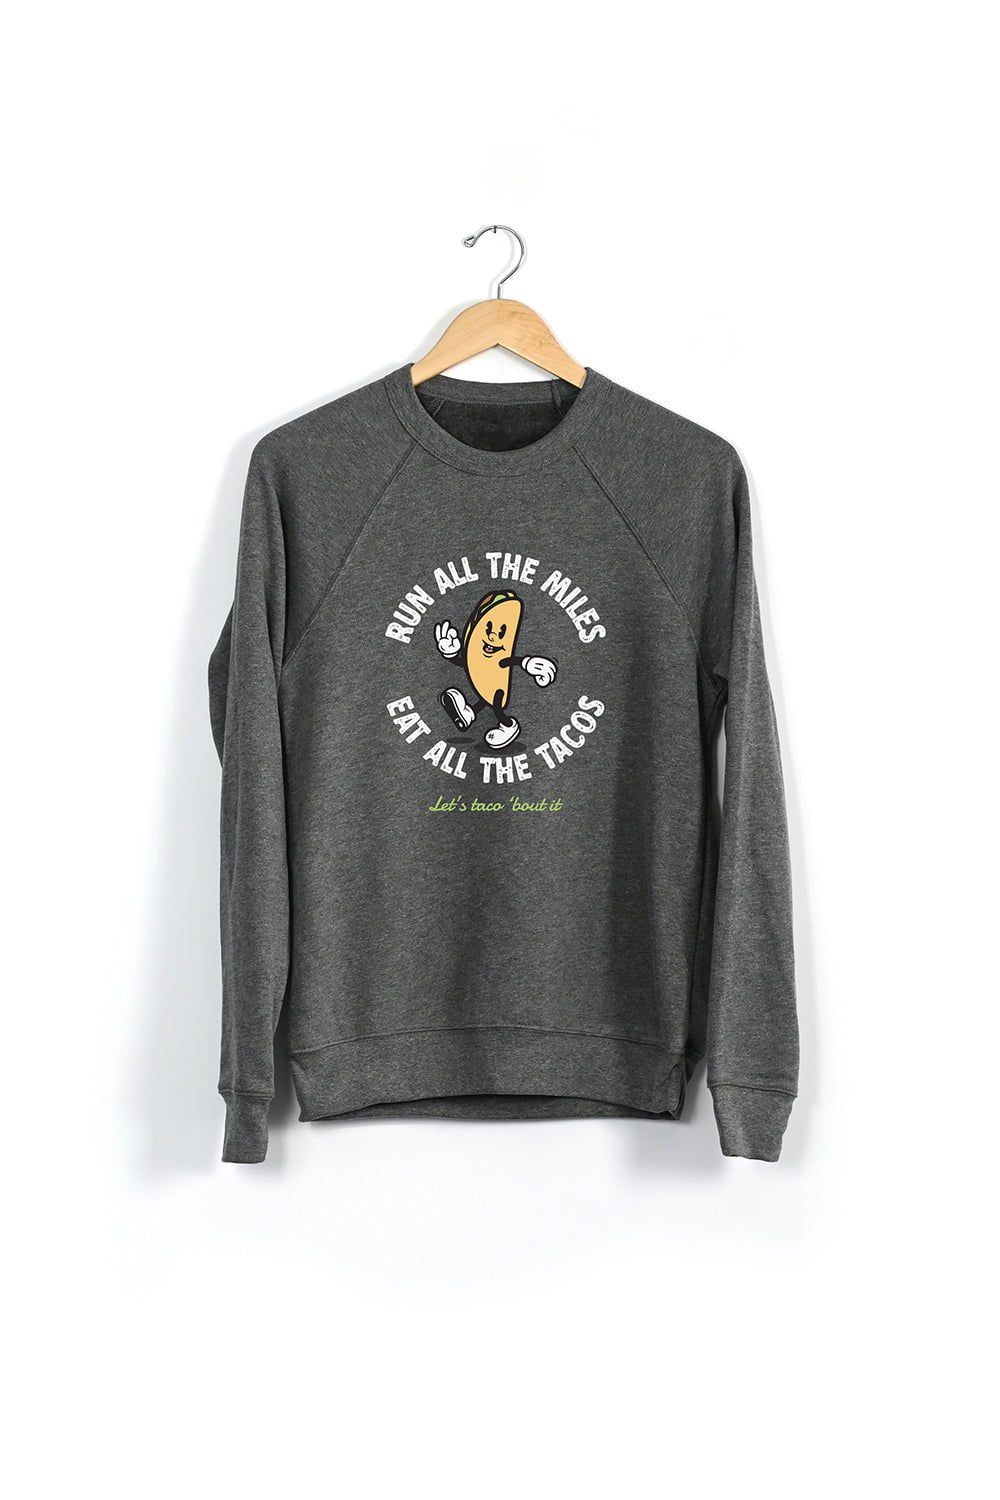 Sarah Marie Design Studio Sweatshirt Run All The Miles, Eat All The Tacos Unisex Sweatshirt